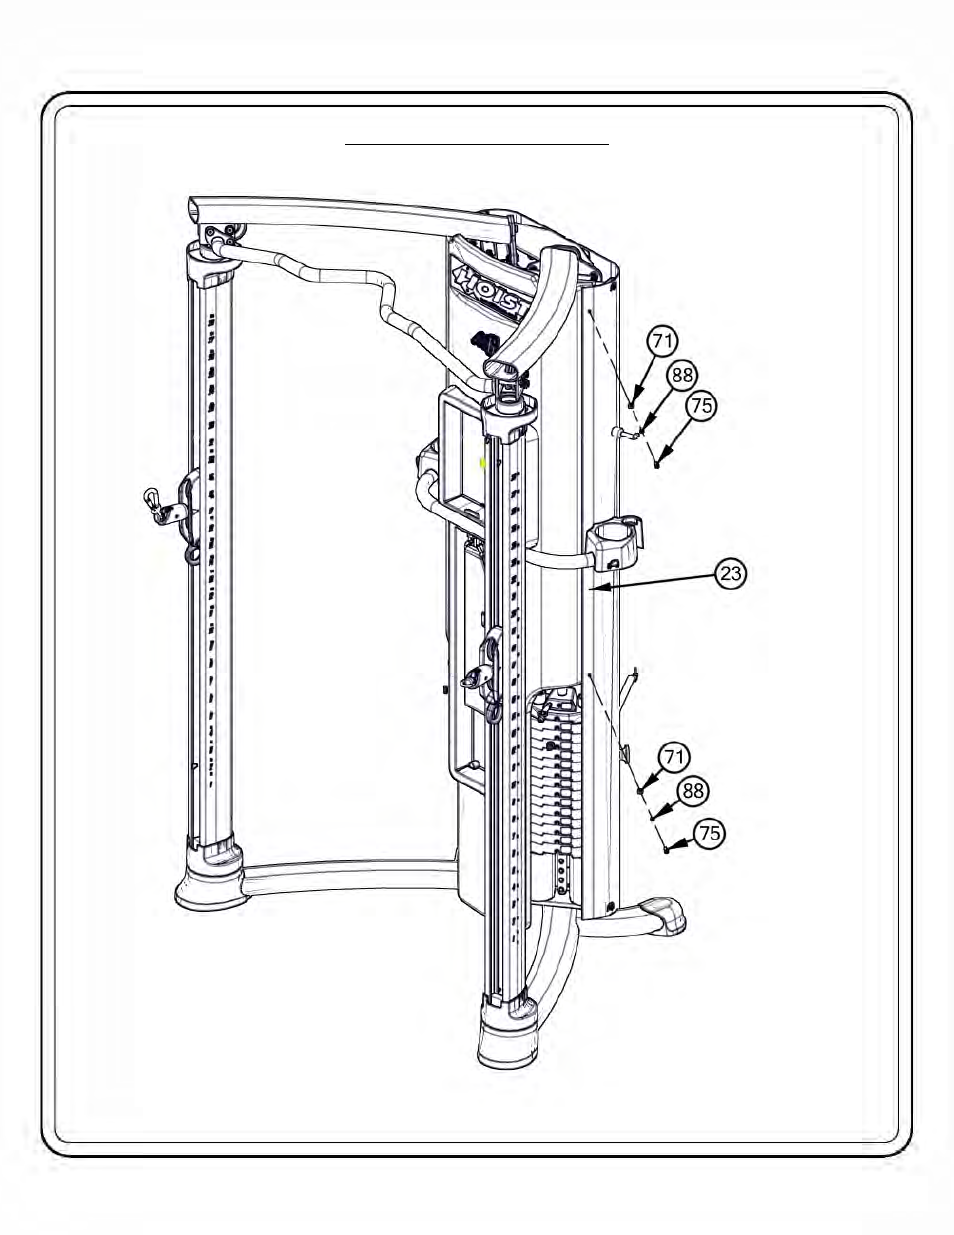 Owner’s manual frame assembly | Hoist Fitness Mi6 User Manual | Page 43